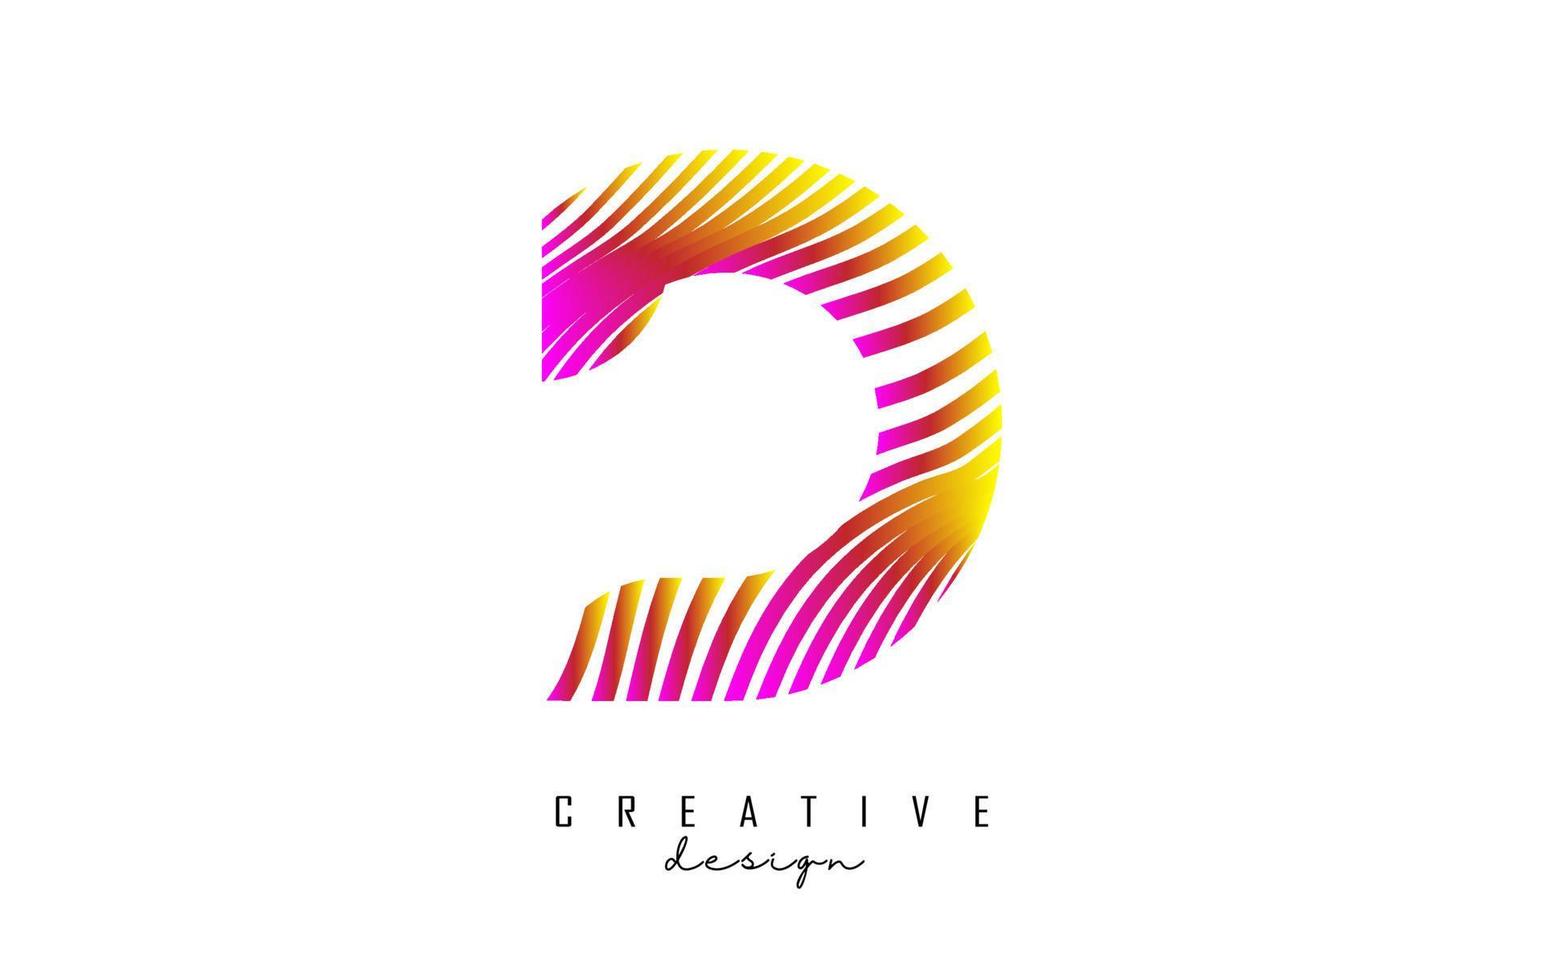 buchstabe d-logo mit lebendigen, bunten, verdrehten linien. kreative vektorillustration mit zebra, fingerabdruckmusterlinien. vektor